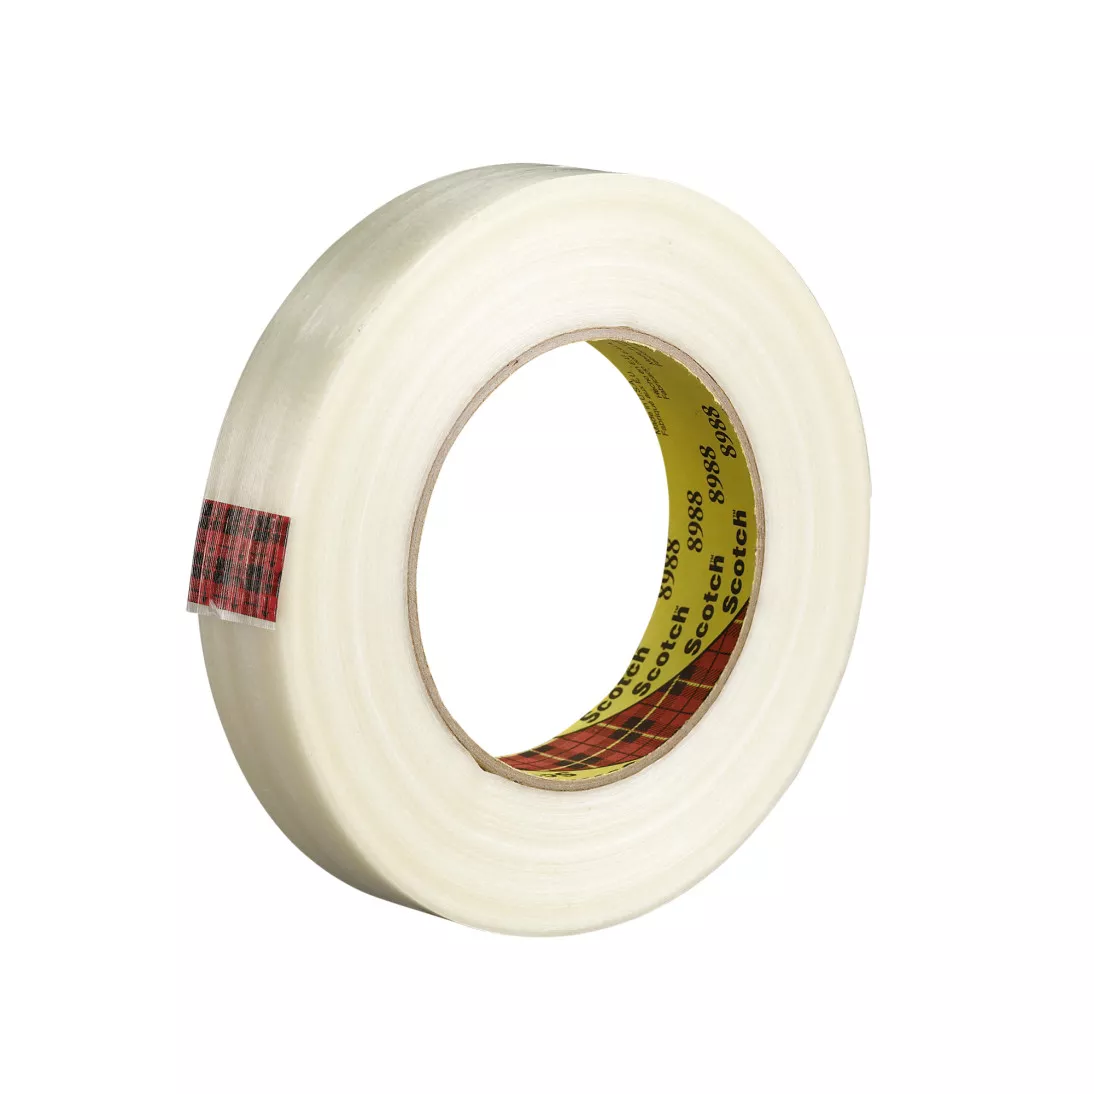 Scotch® Strapping Tape 8896, Ivory, 24 mm x 55 m, 36 rolls per case